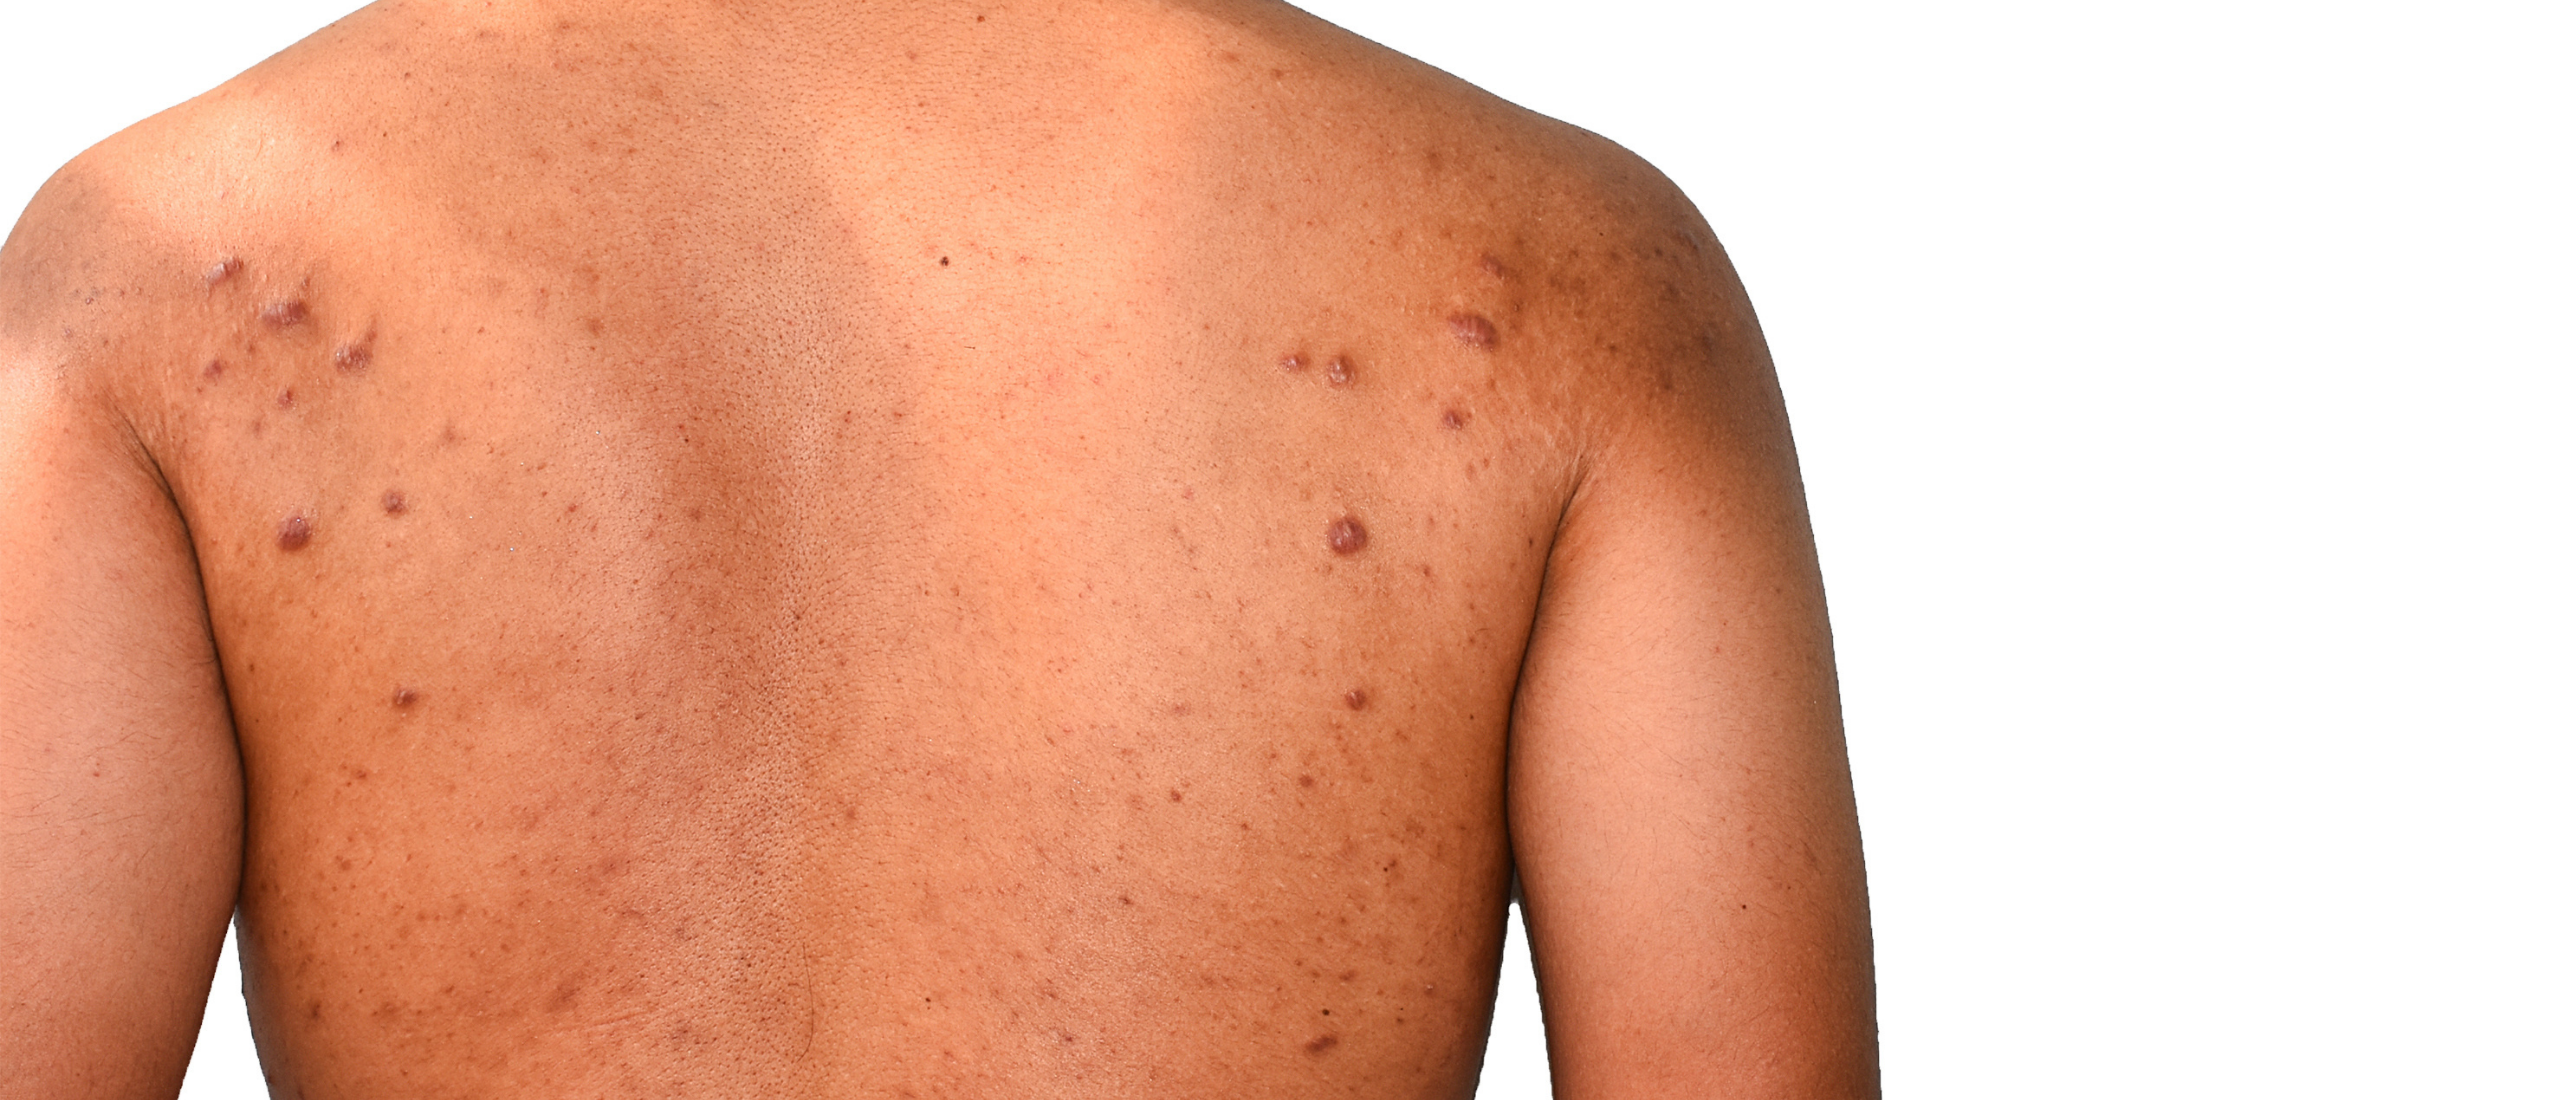 Acne keloidalis: acne littekens